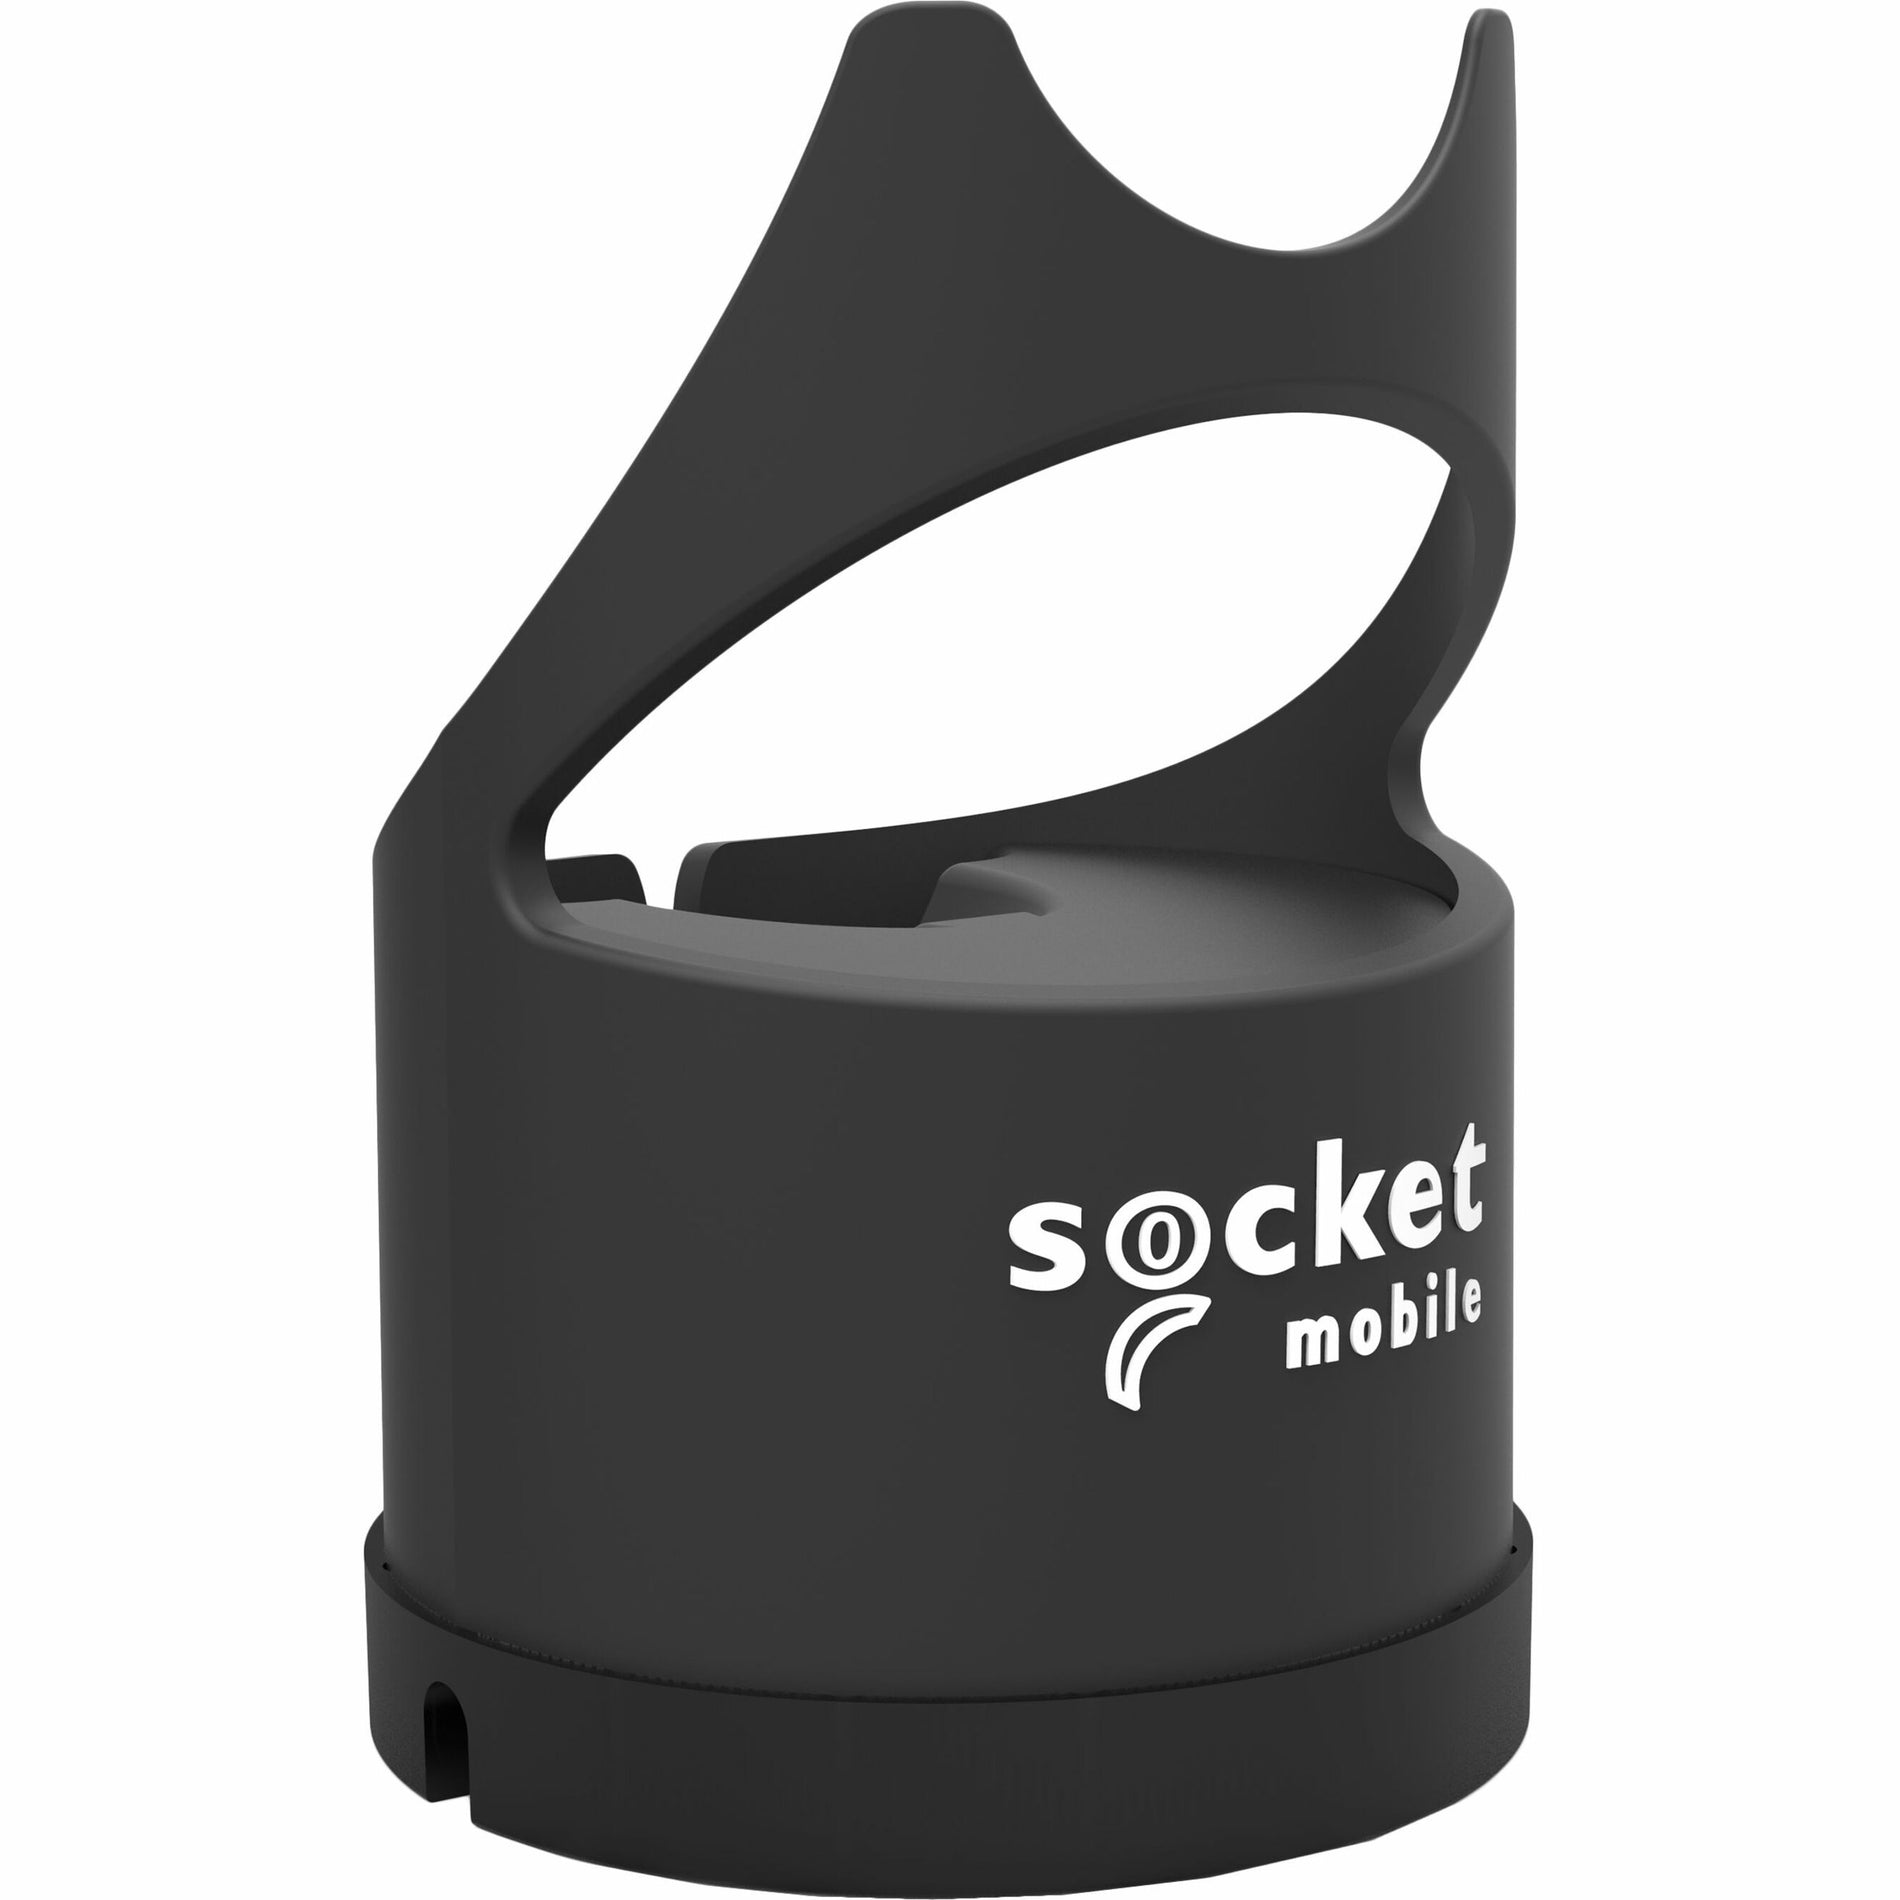 Socket Mobile CX3986-3043 SocketScan S720 Barcode Scanner Kit, Green & Black Dock, Wireless, 2D & 1D Scanning